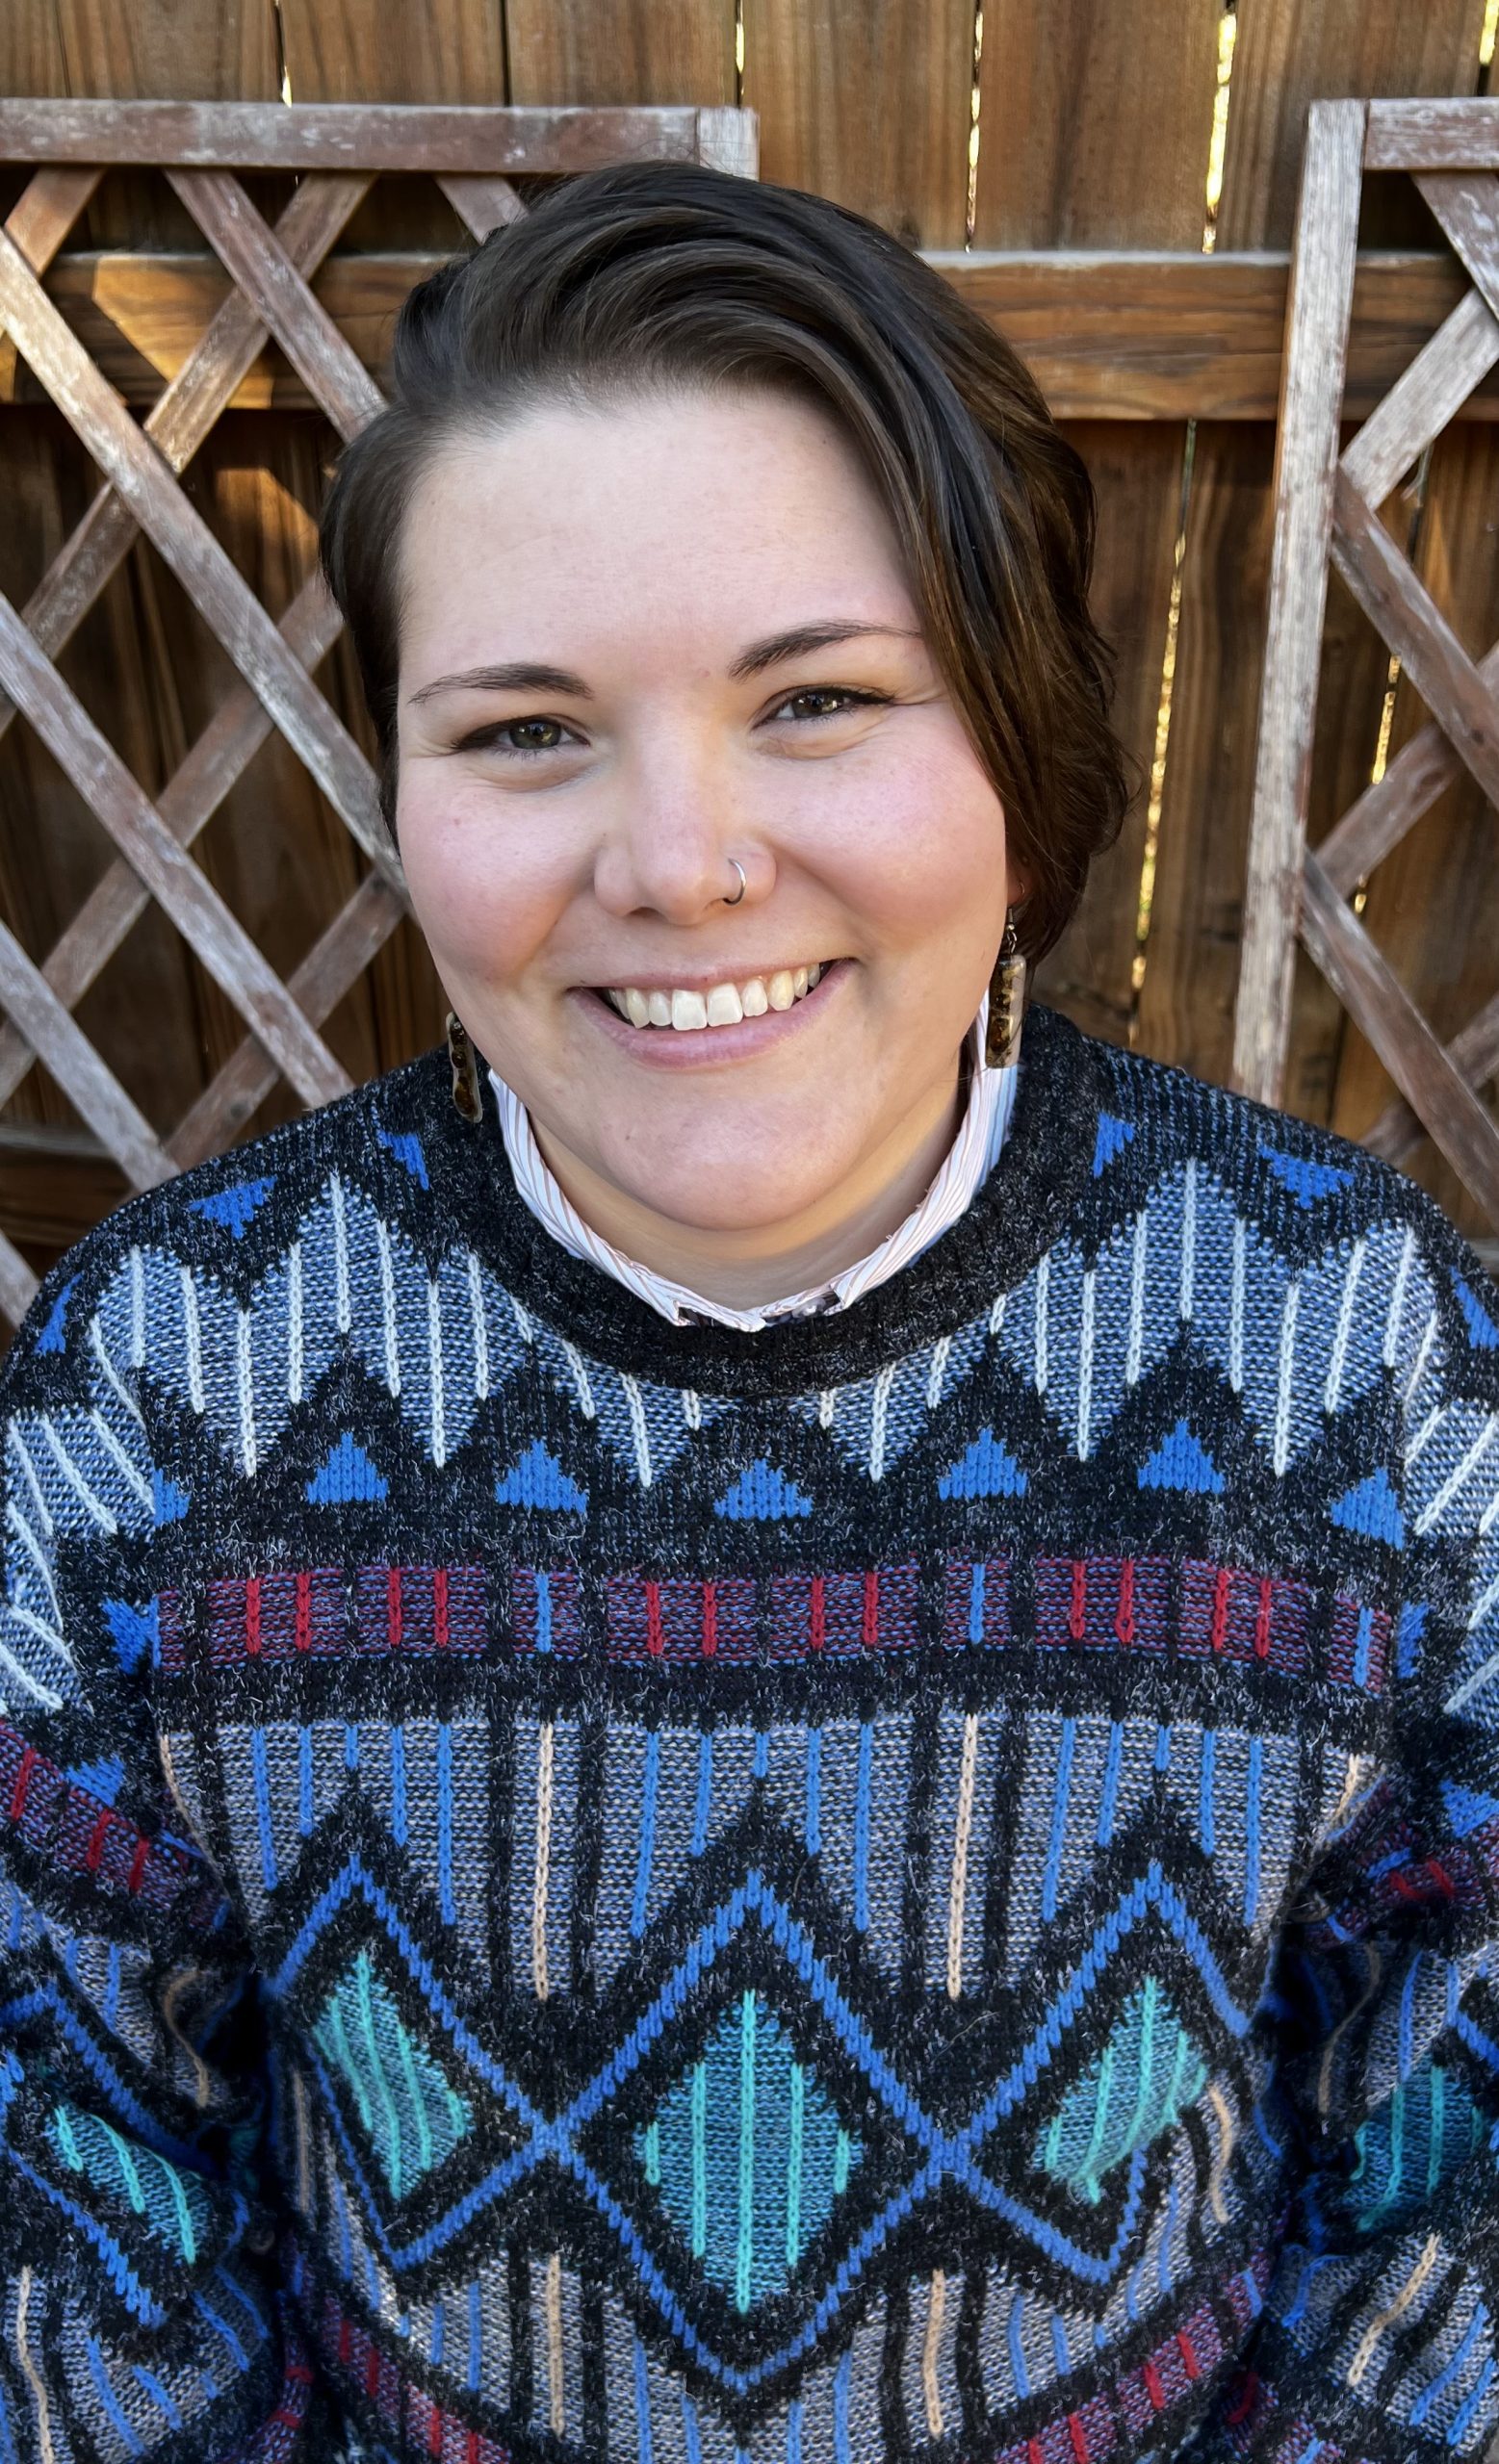 Tara, smiling in a geometric-pattern sweater.